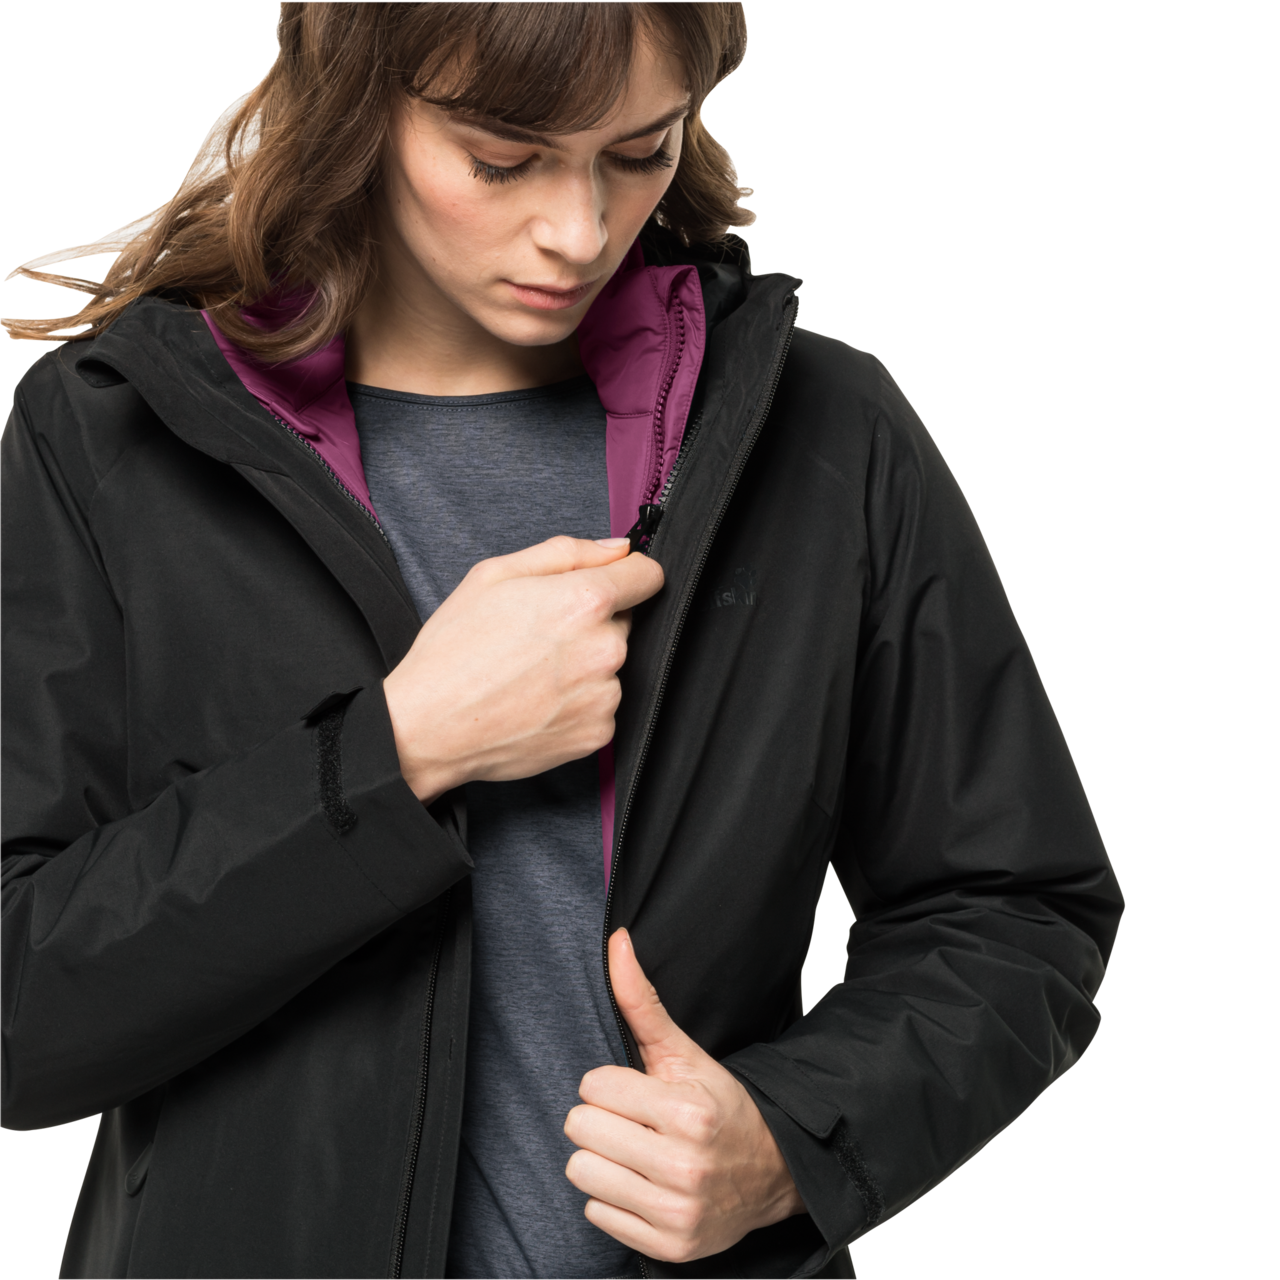 Women's Bergland Insulated Jacket | Jack Wolfskin